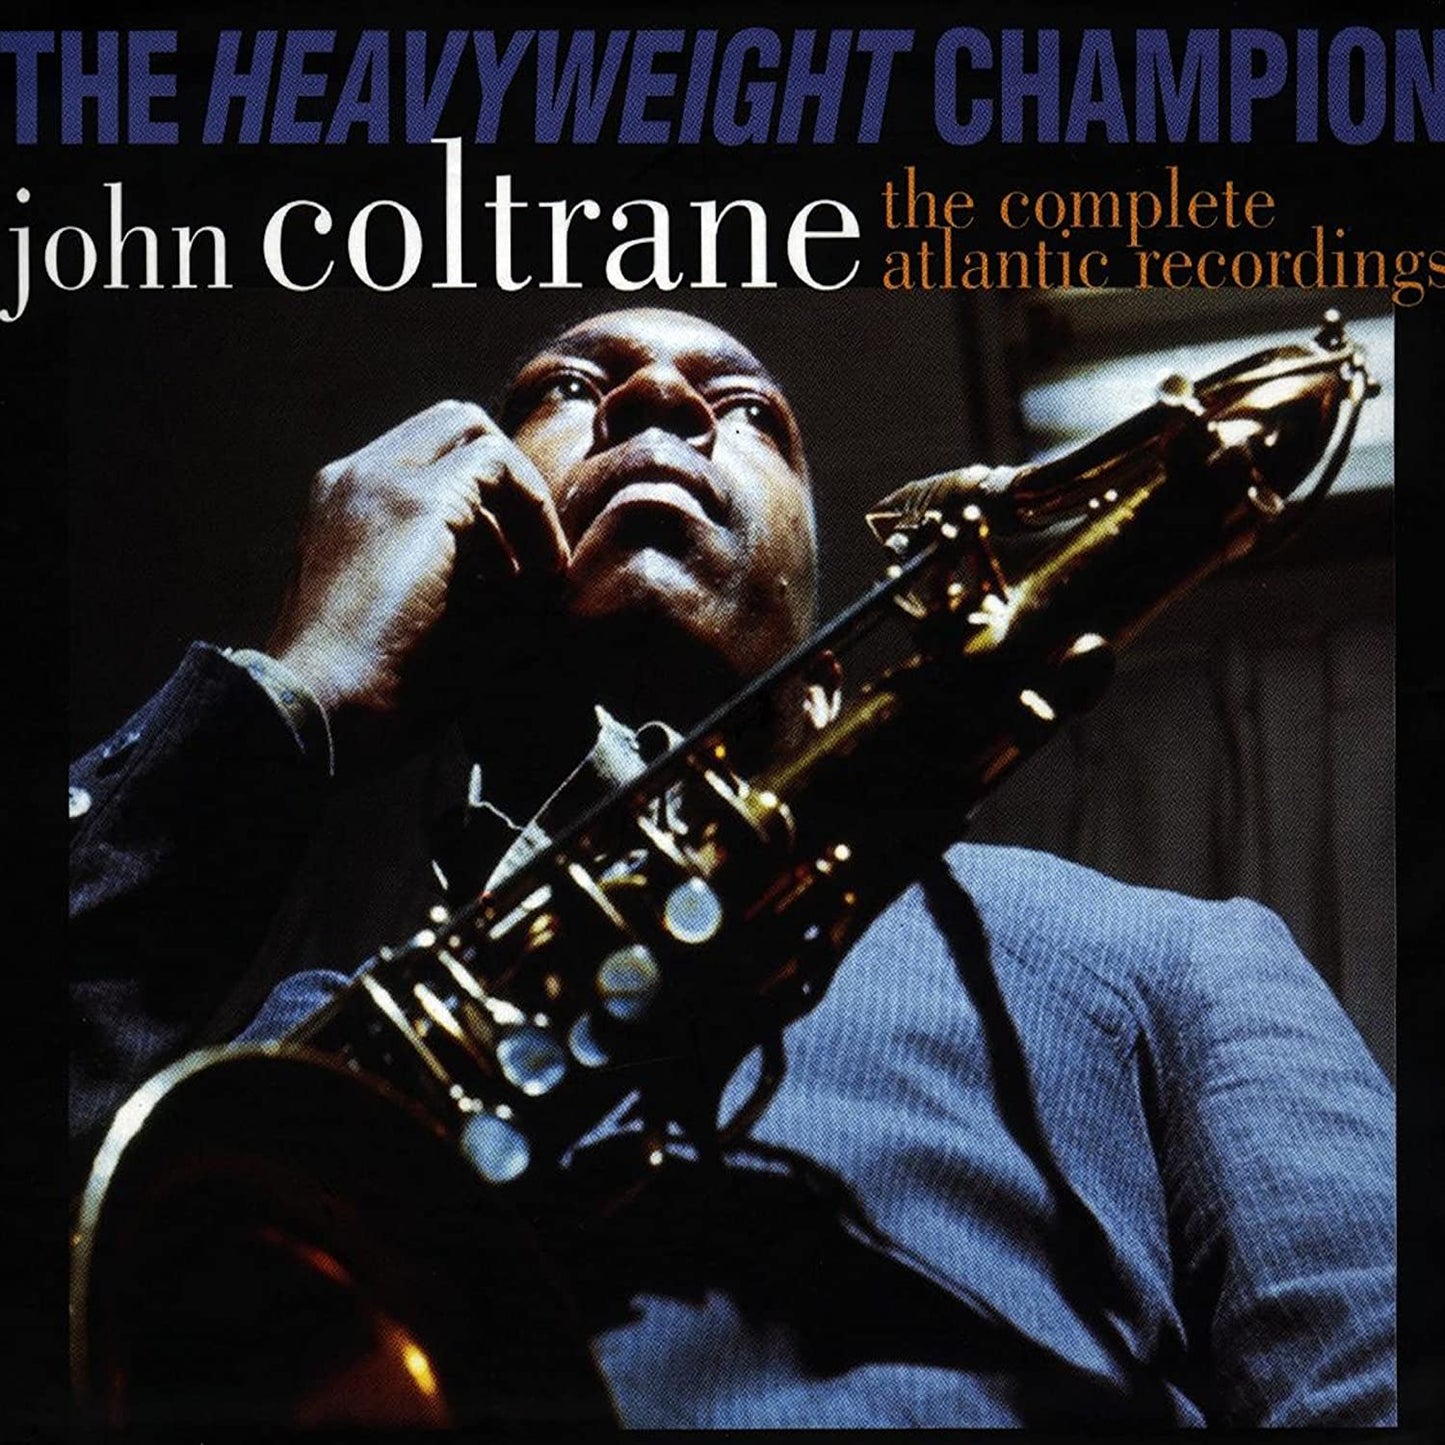 John Coltrane - Heavyweight Champion: Complete Atlantic Recordings - 7CD